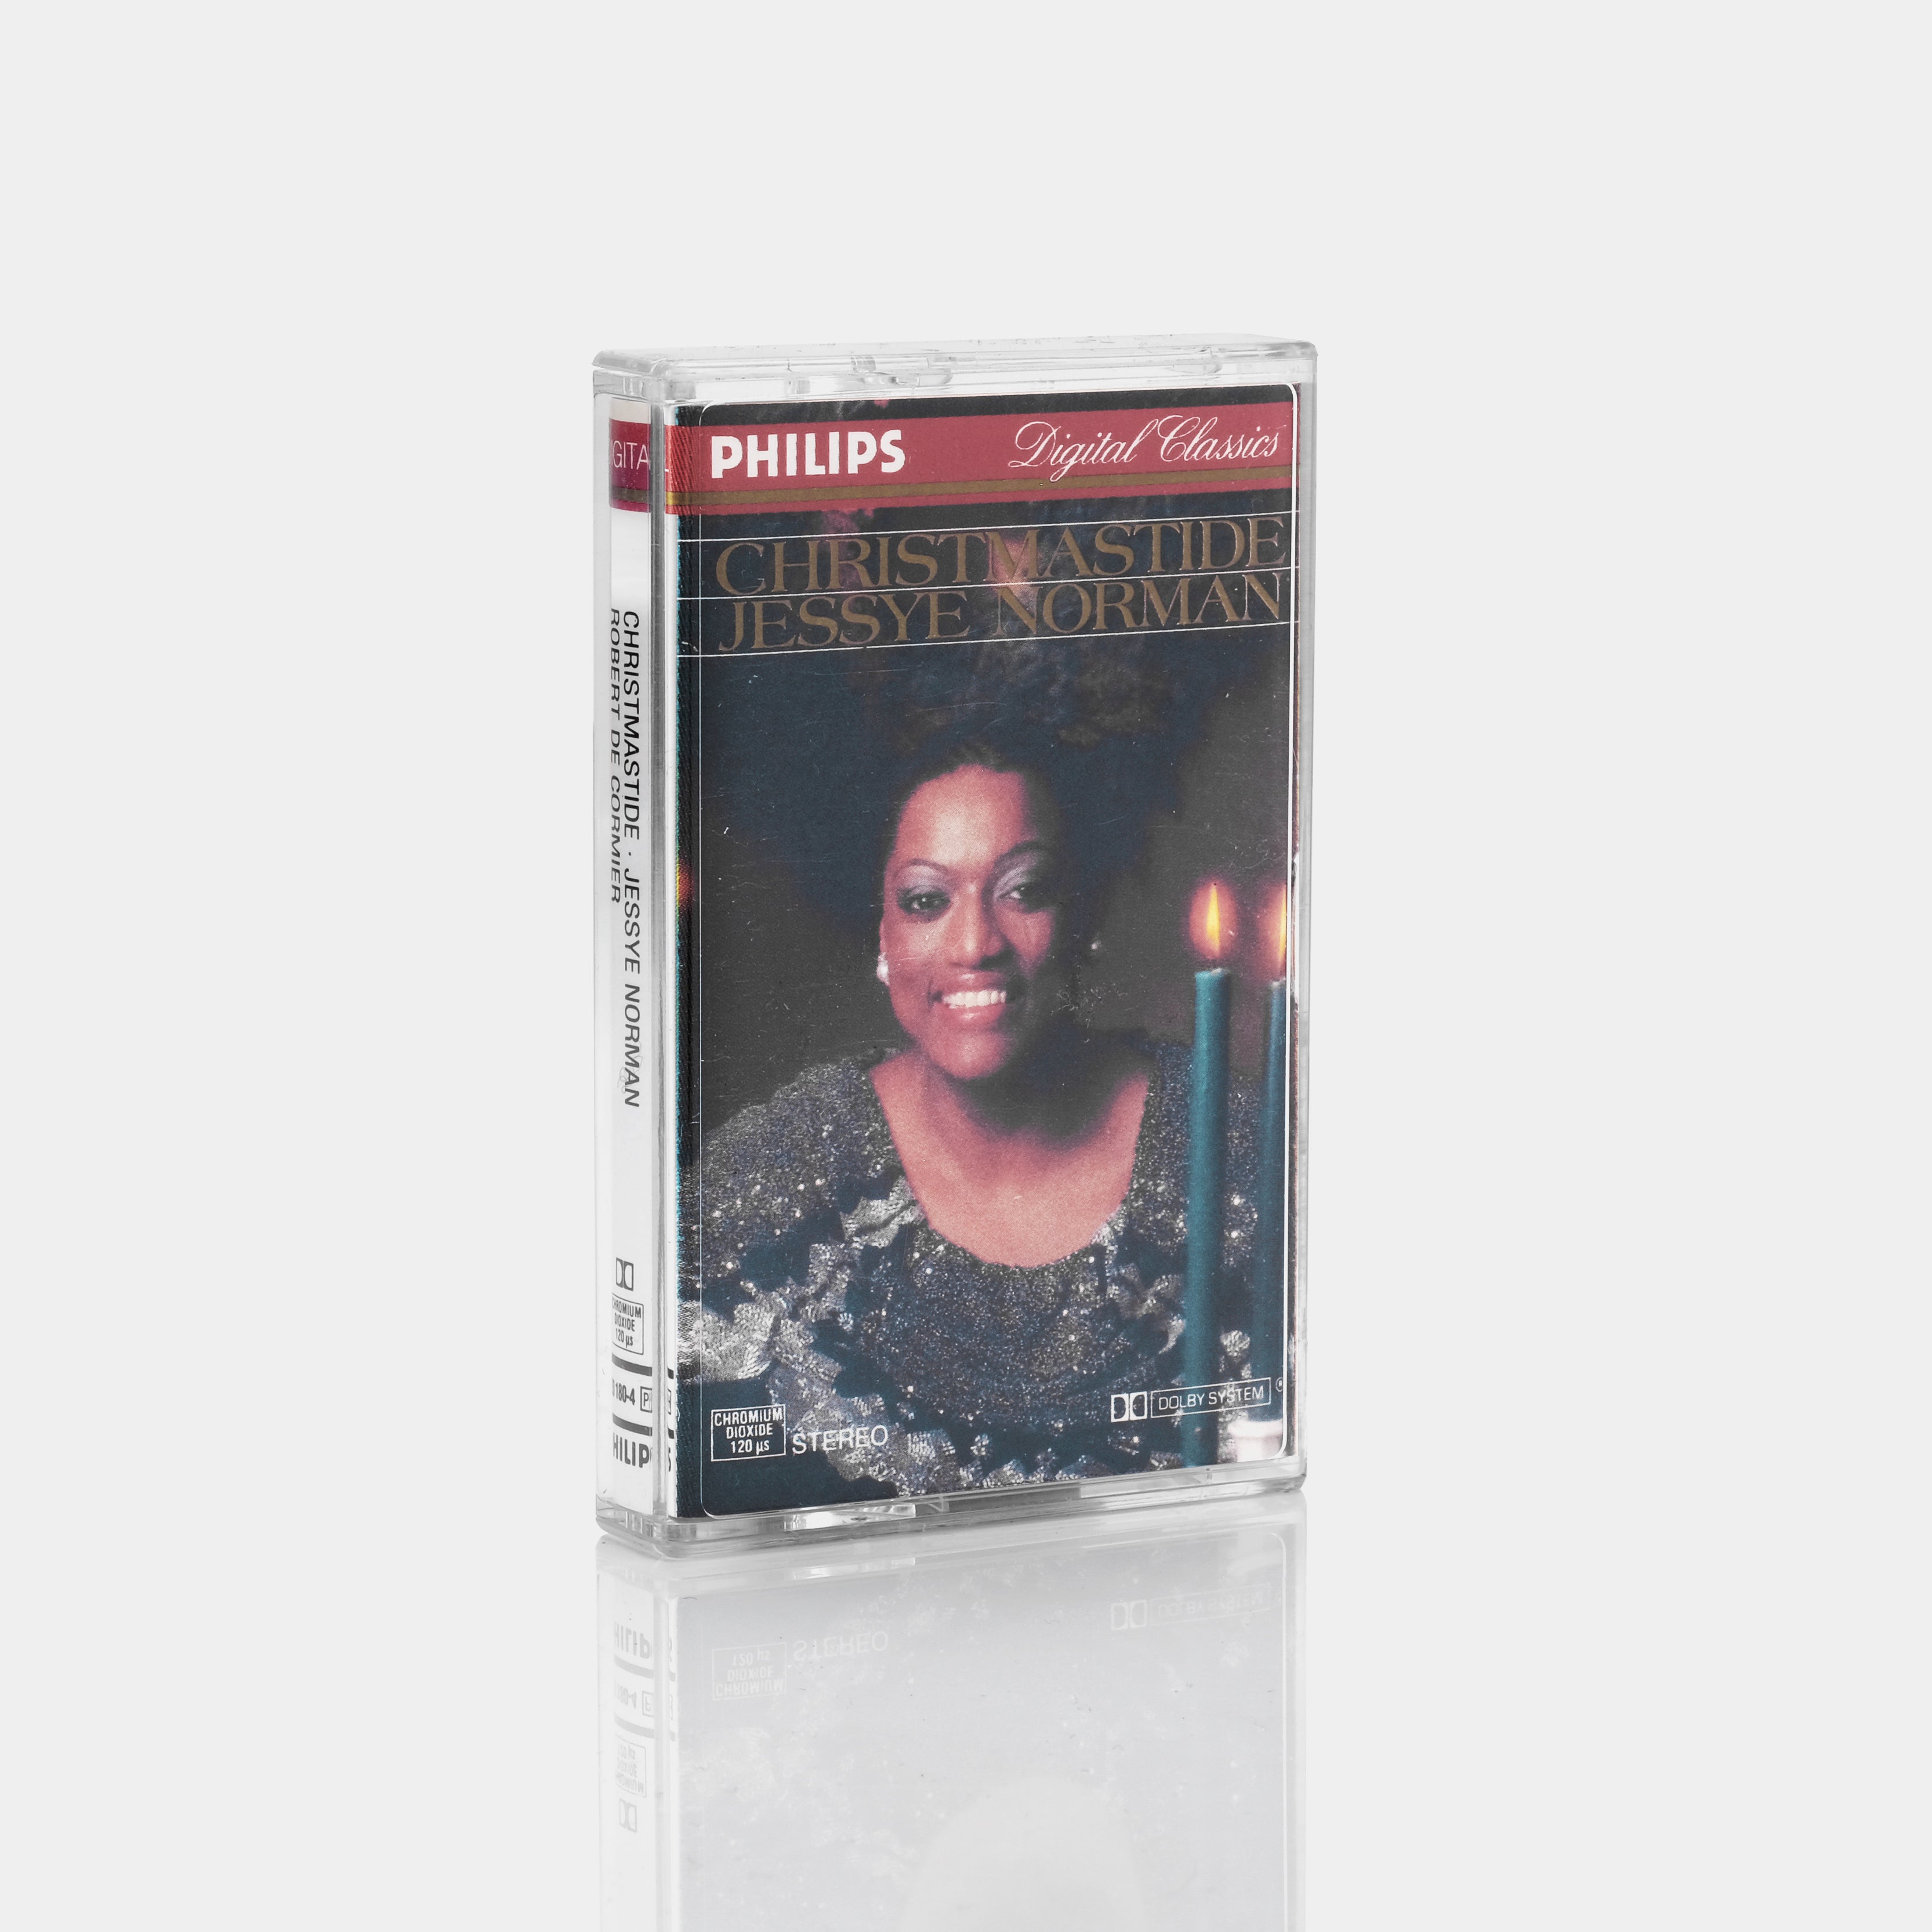 Jessye Norman - Christmastide Cassette Tape